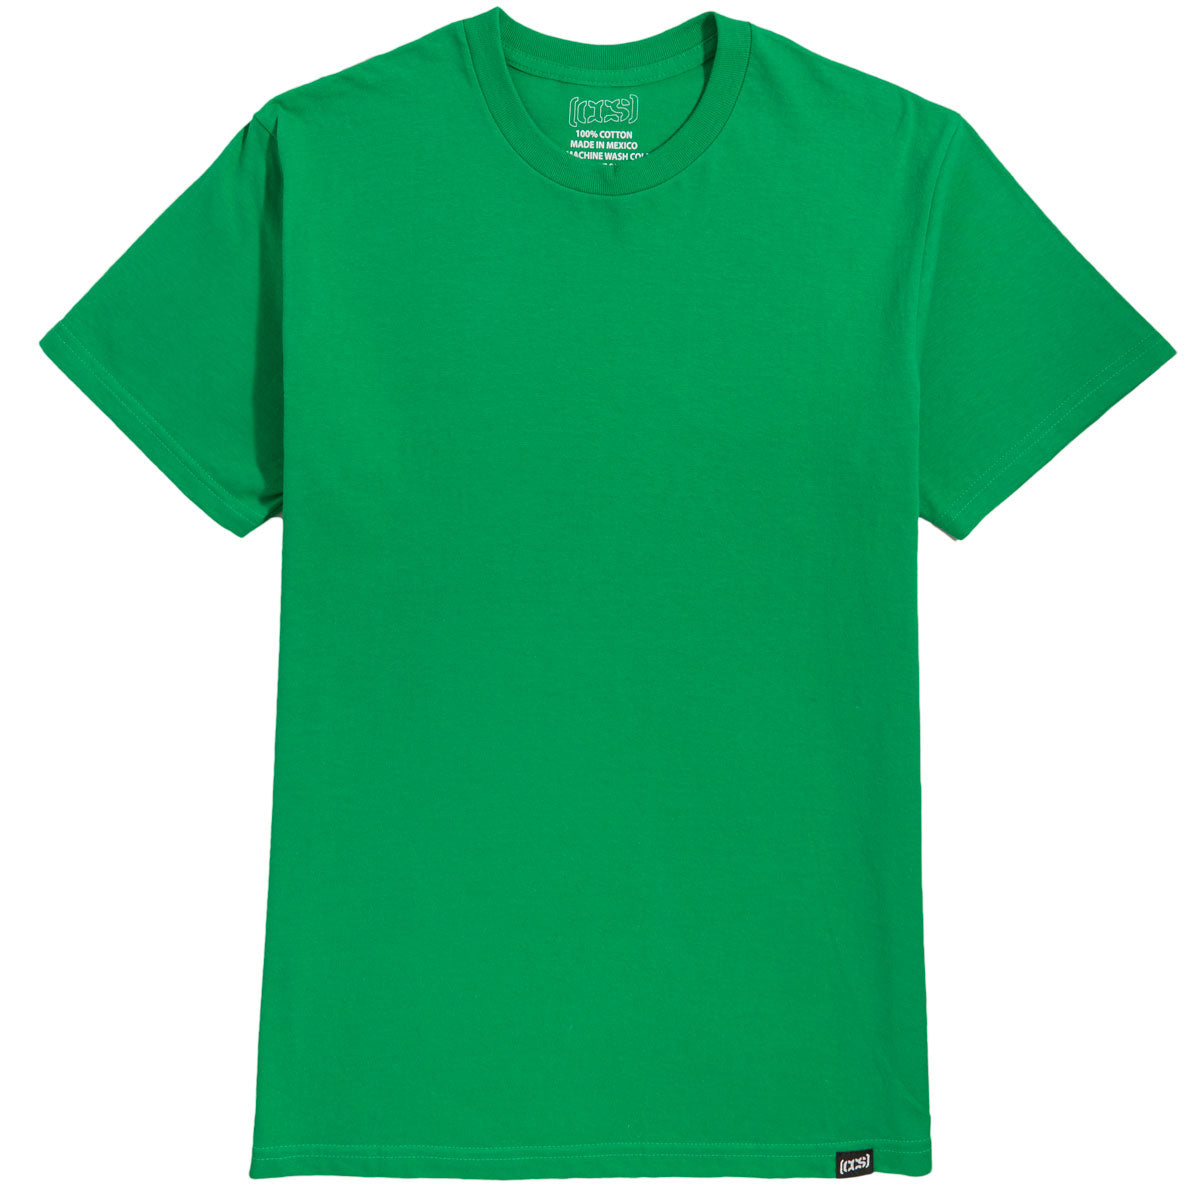 CCS Original Heavyweight T-Shirt - Green image 1